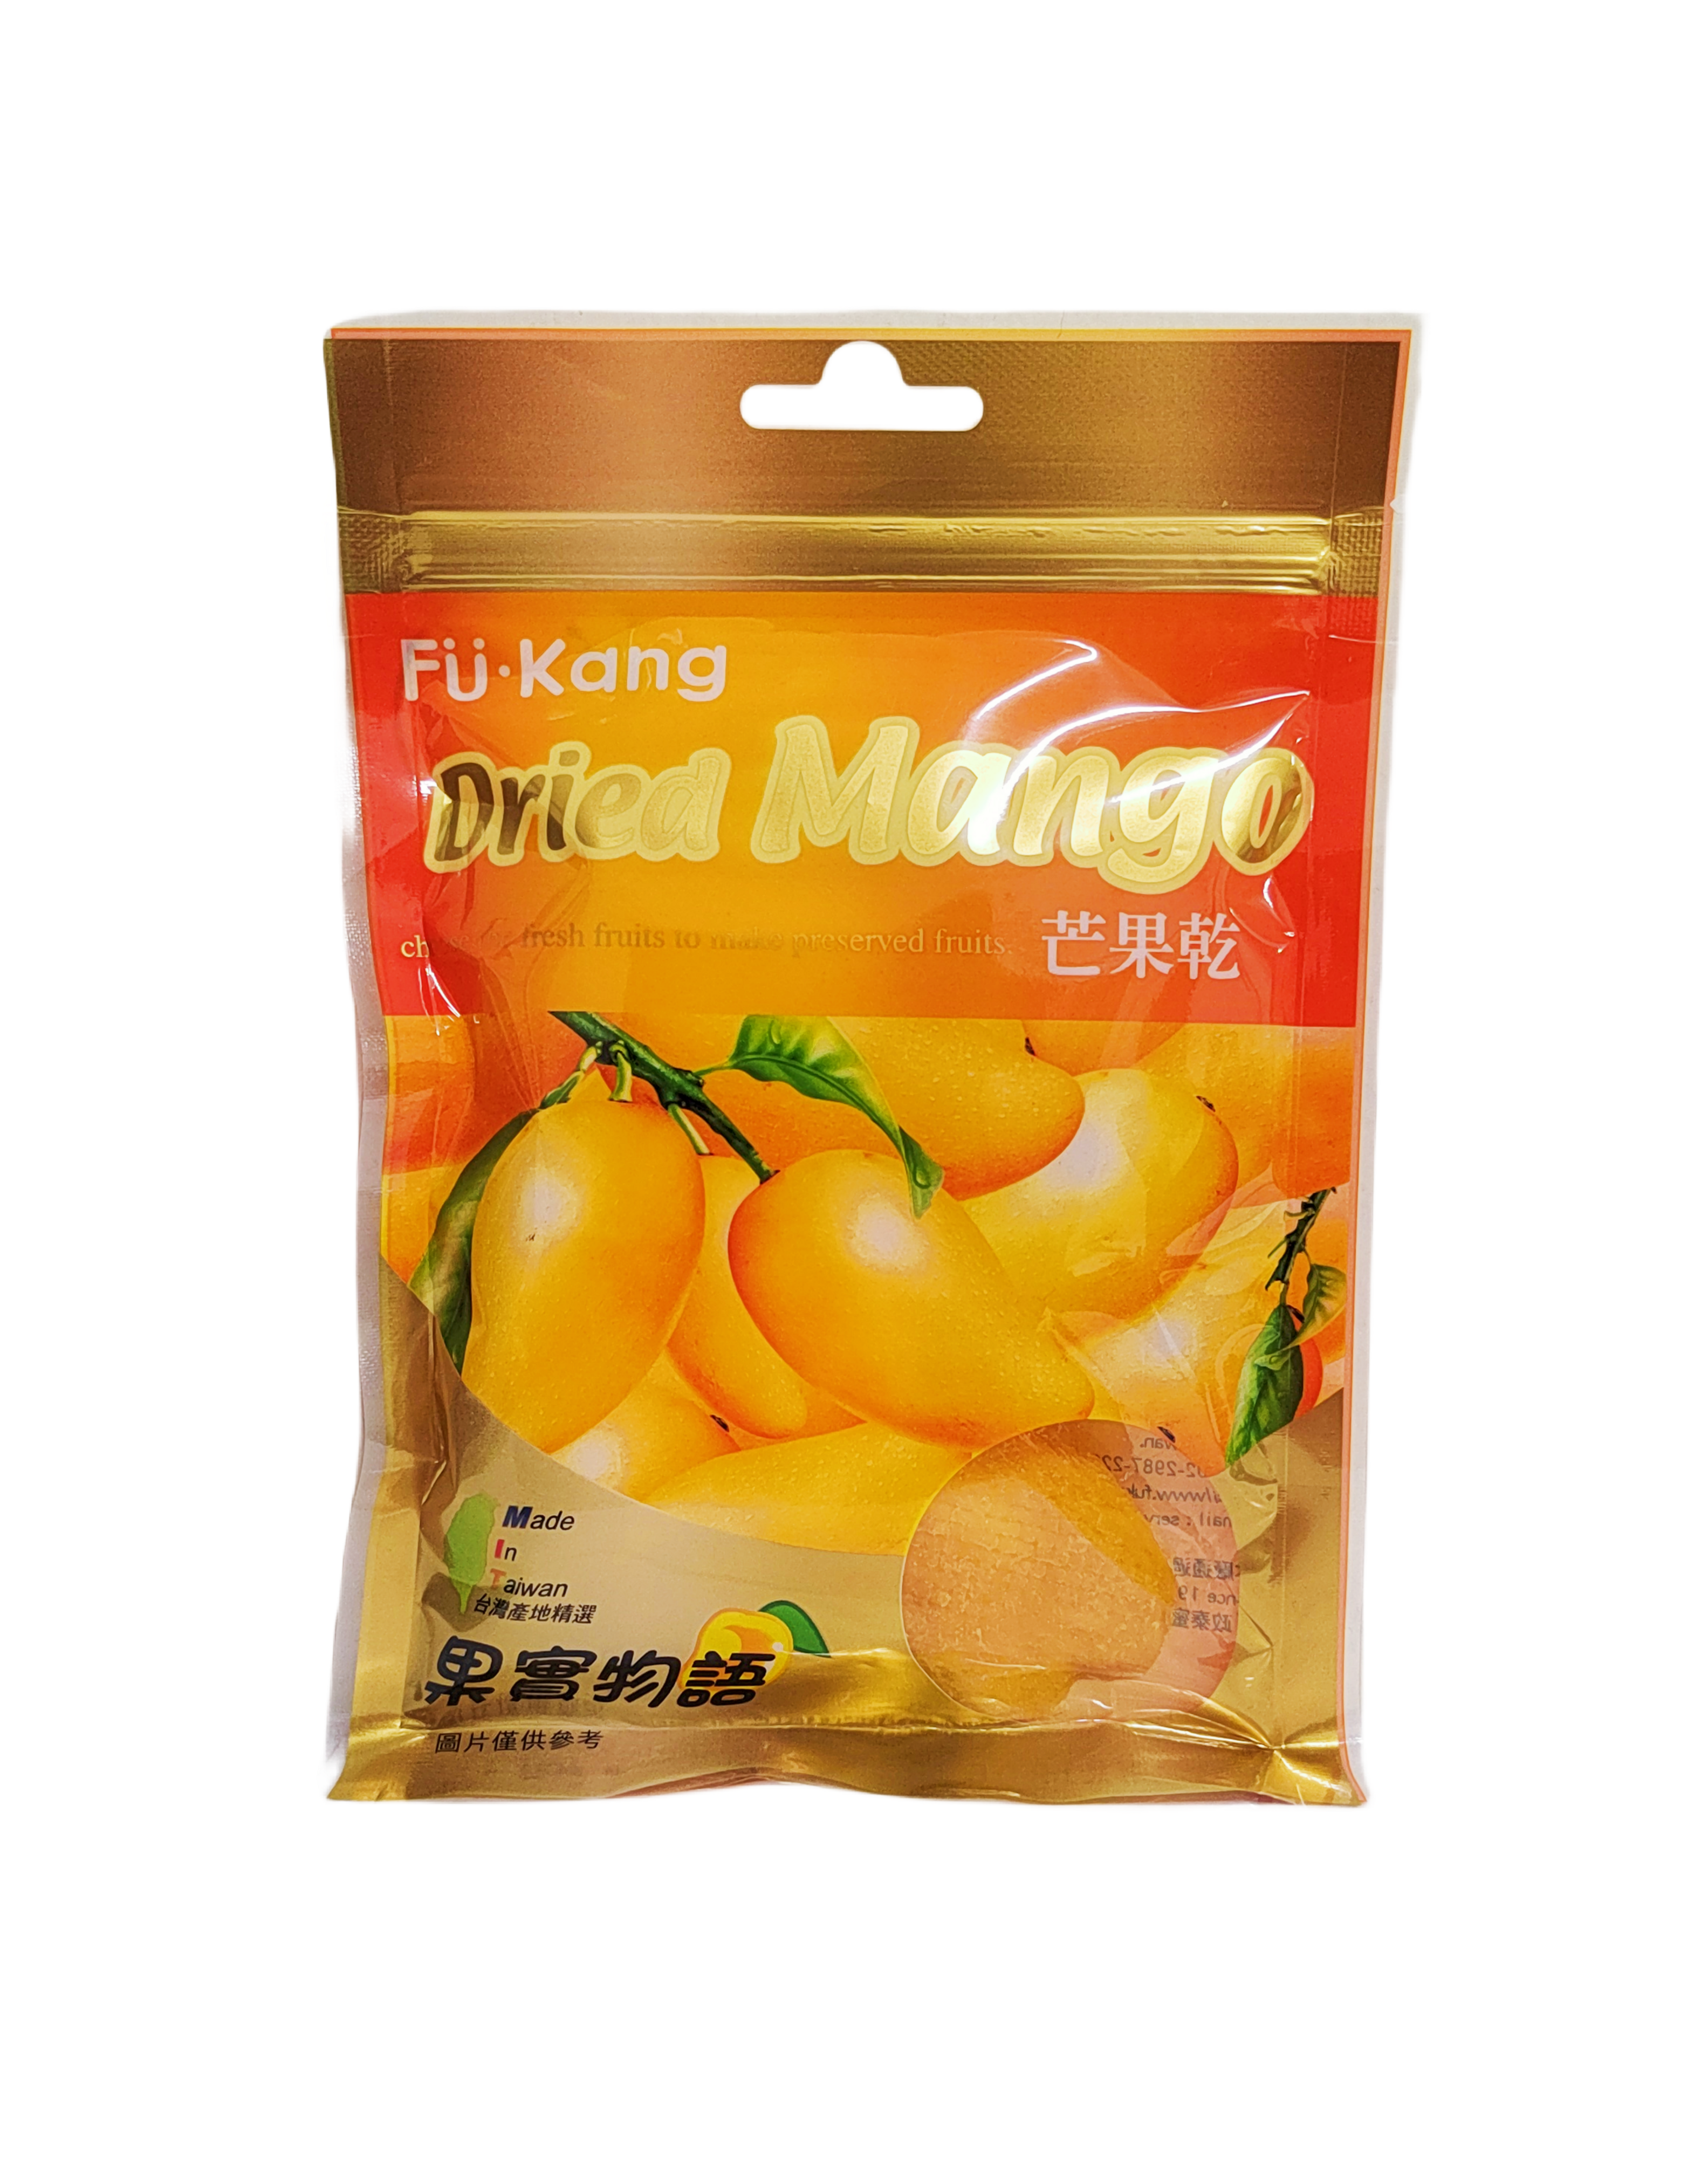 Dried Mango 70g Fu Kang Taiwan